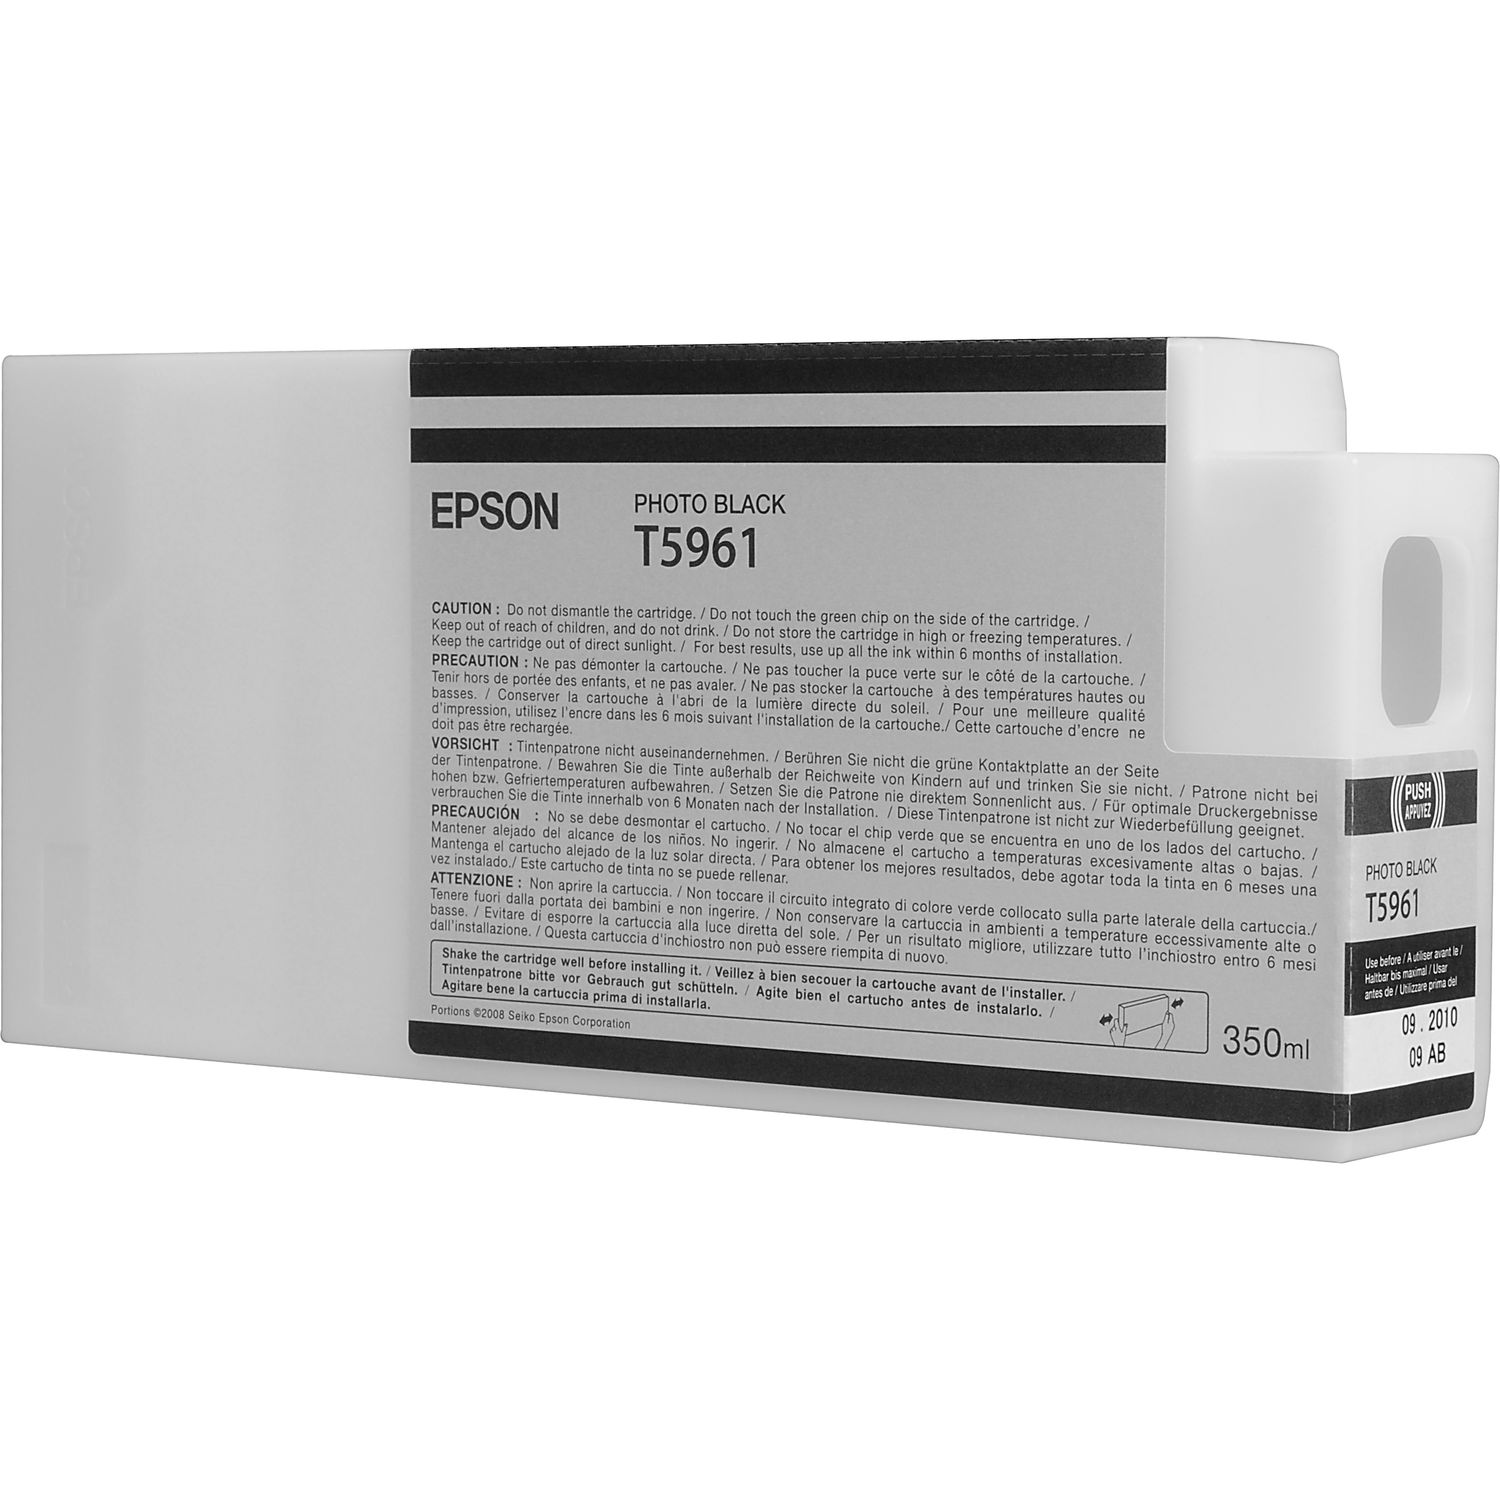 Cartucho de Tinta Epson Ultrachrome Hdr T596100 Photo Black para Impresoras Stylus Pro Seleccionadas